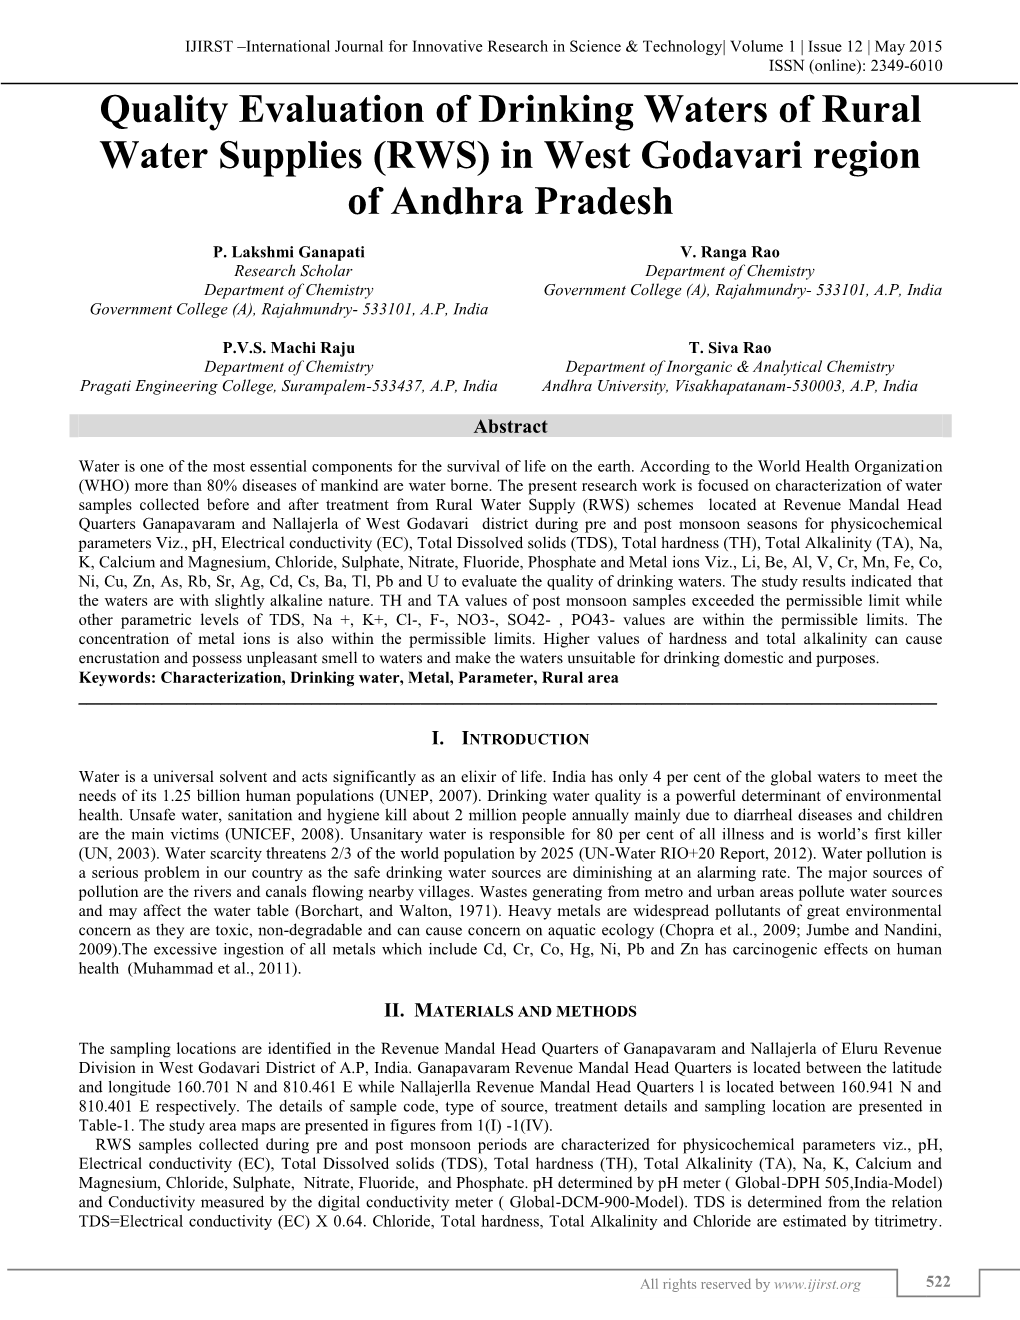 In West Godavari Region of Andhra Pradesh (IJIRST/ Volume 1 / Issue 12 / 088)